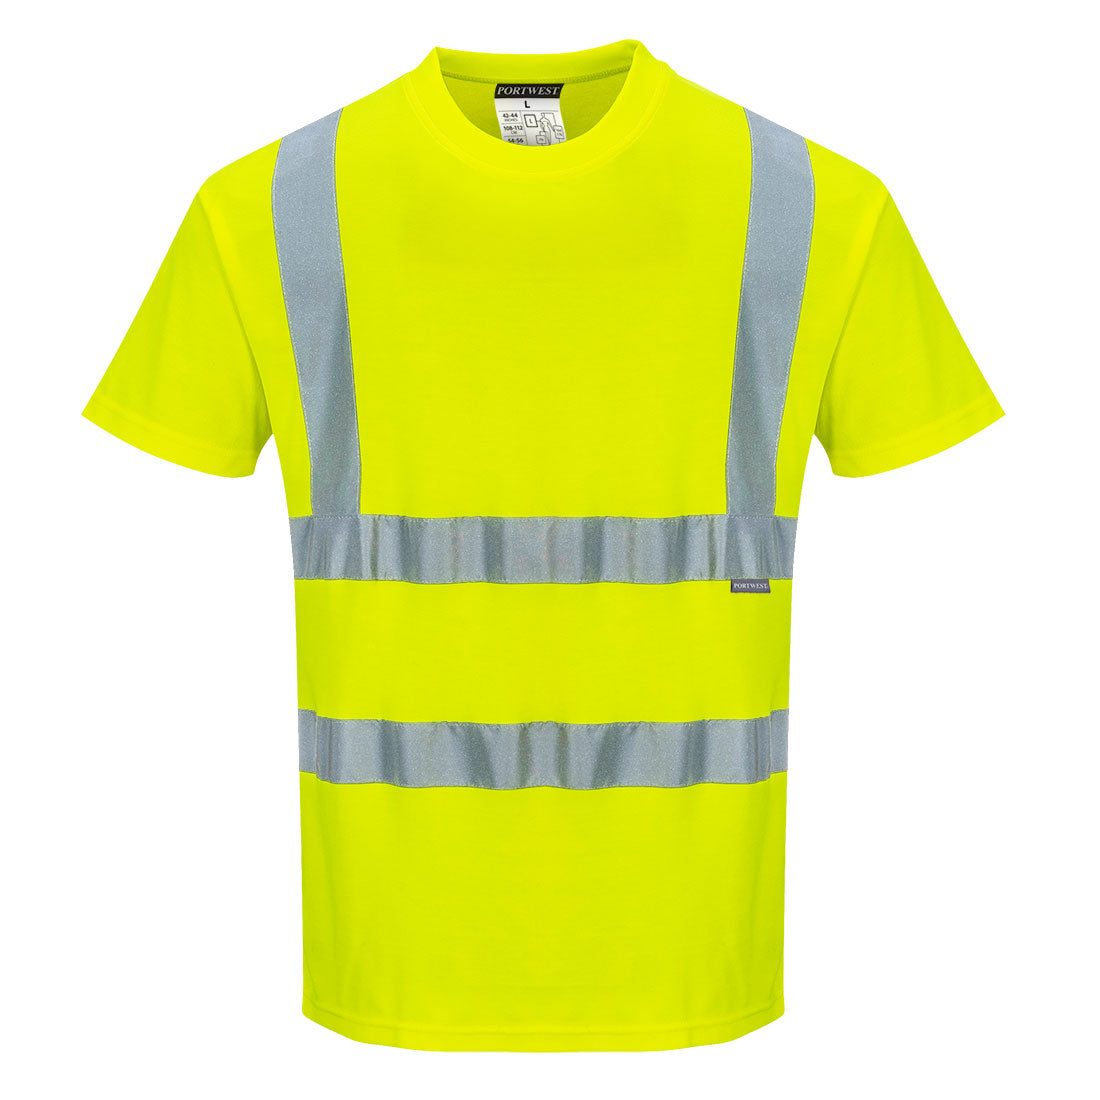 Portwest - S170 - T-shirt Hi-vis MC coton comfort - 2 coloris